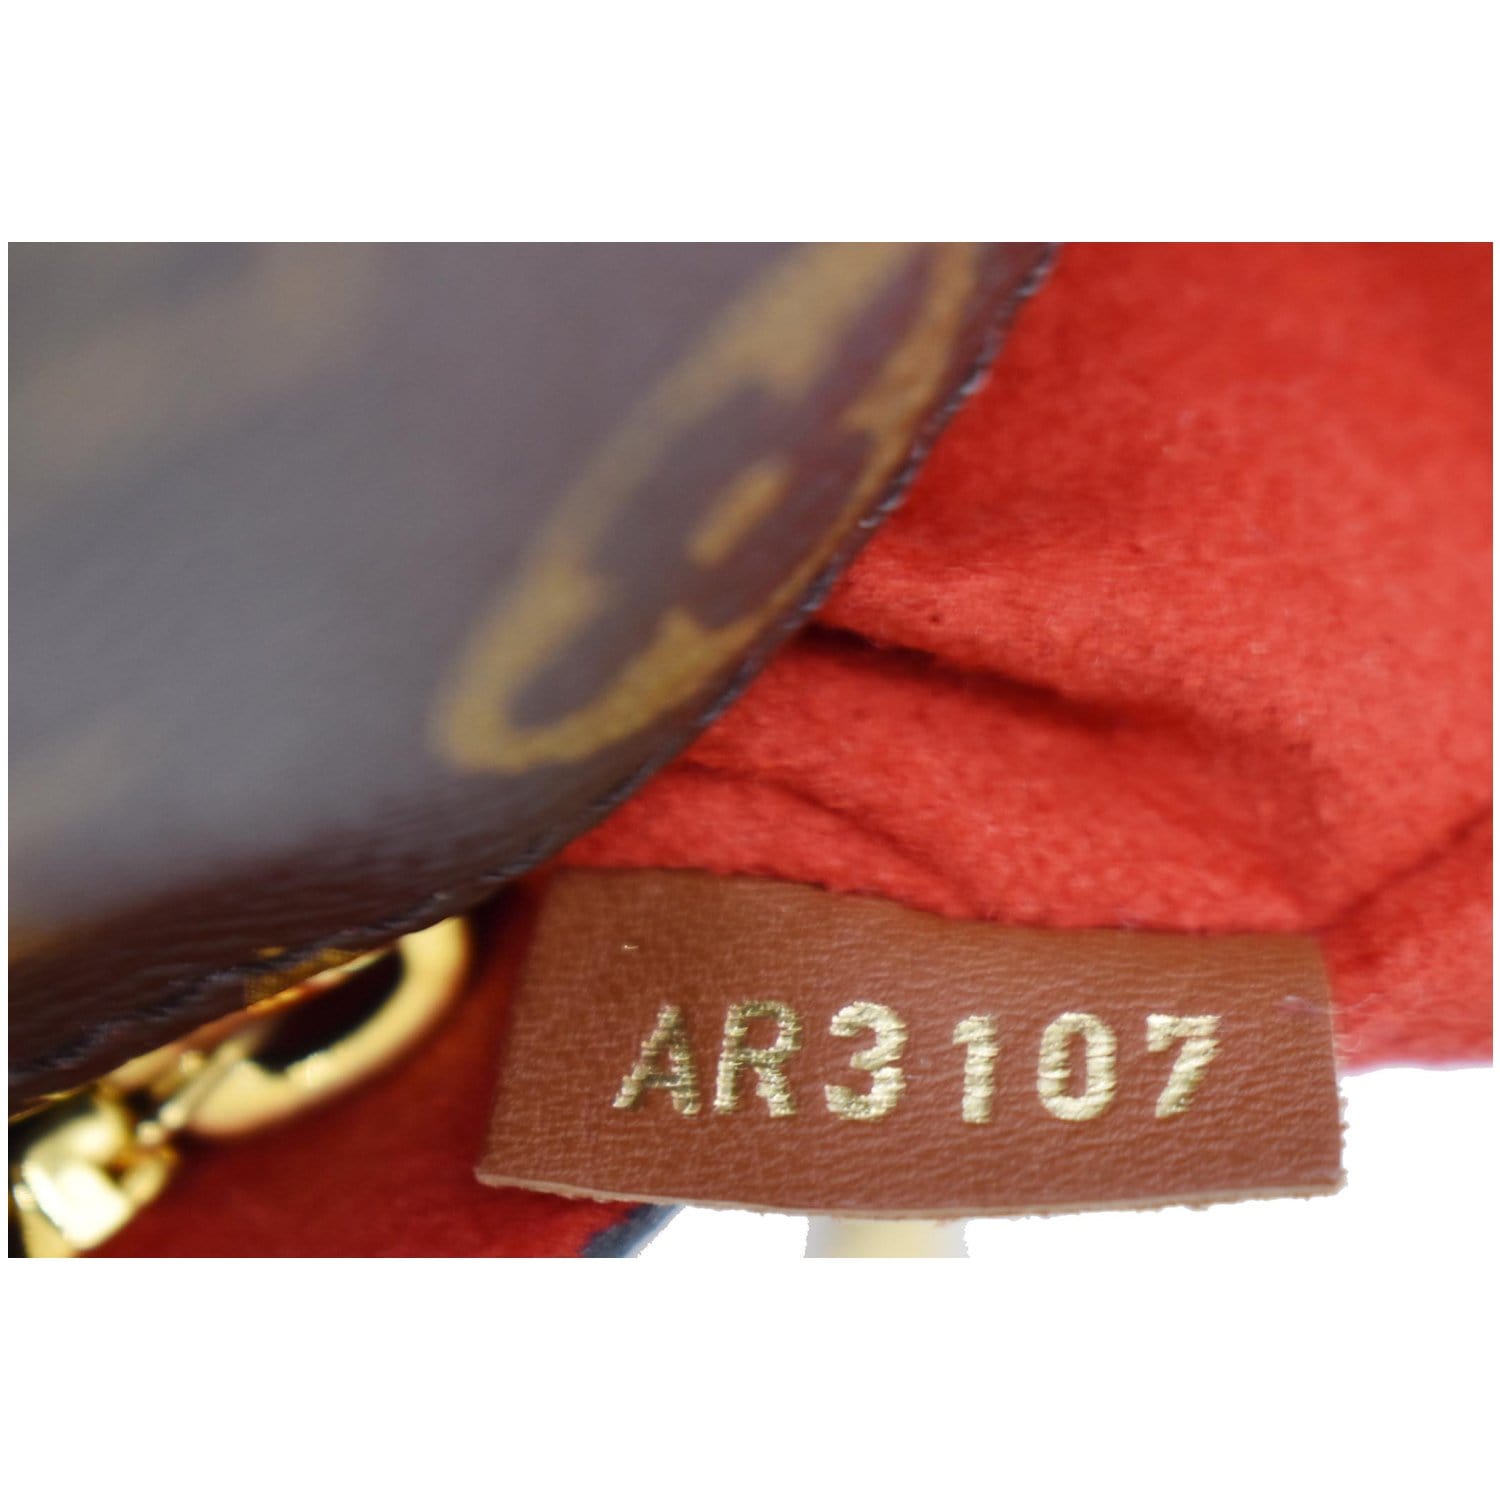 M41456 Louis Vuitton 2017 Monogram Tuileries Handbag- Caramel